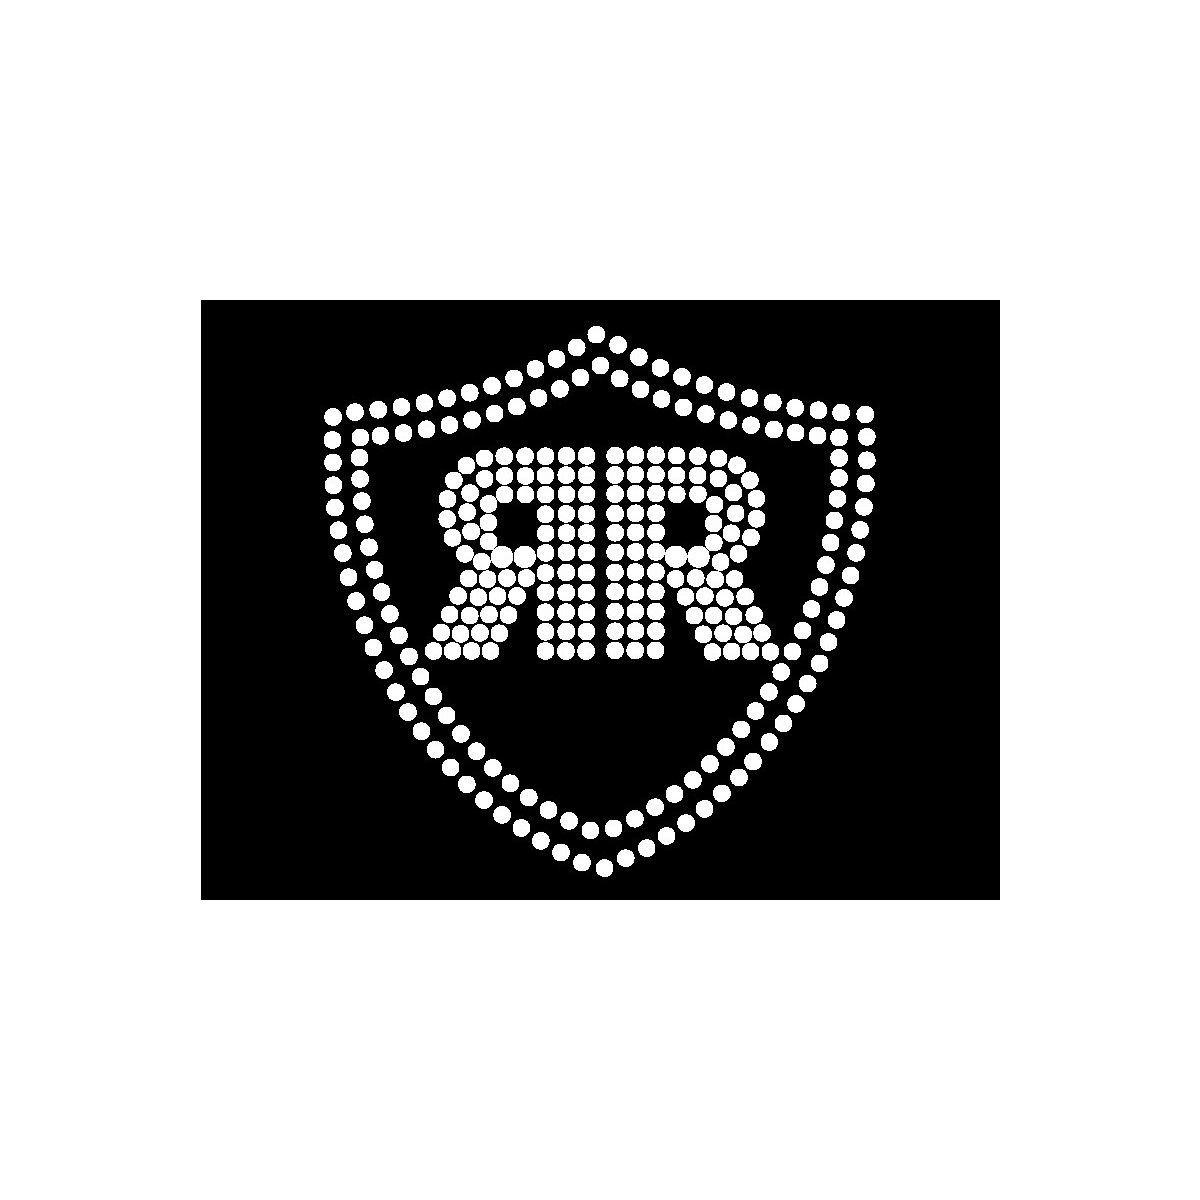 Rhinestone Company Logo - Personalised Company / Business #Name or #Logo #bling | Business ...